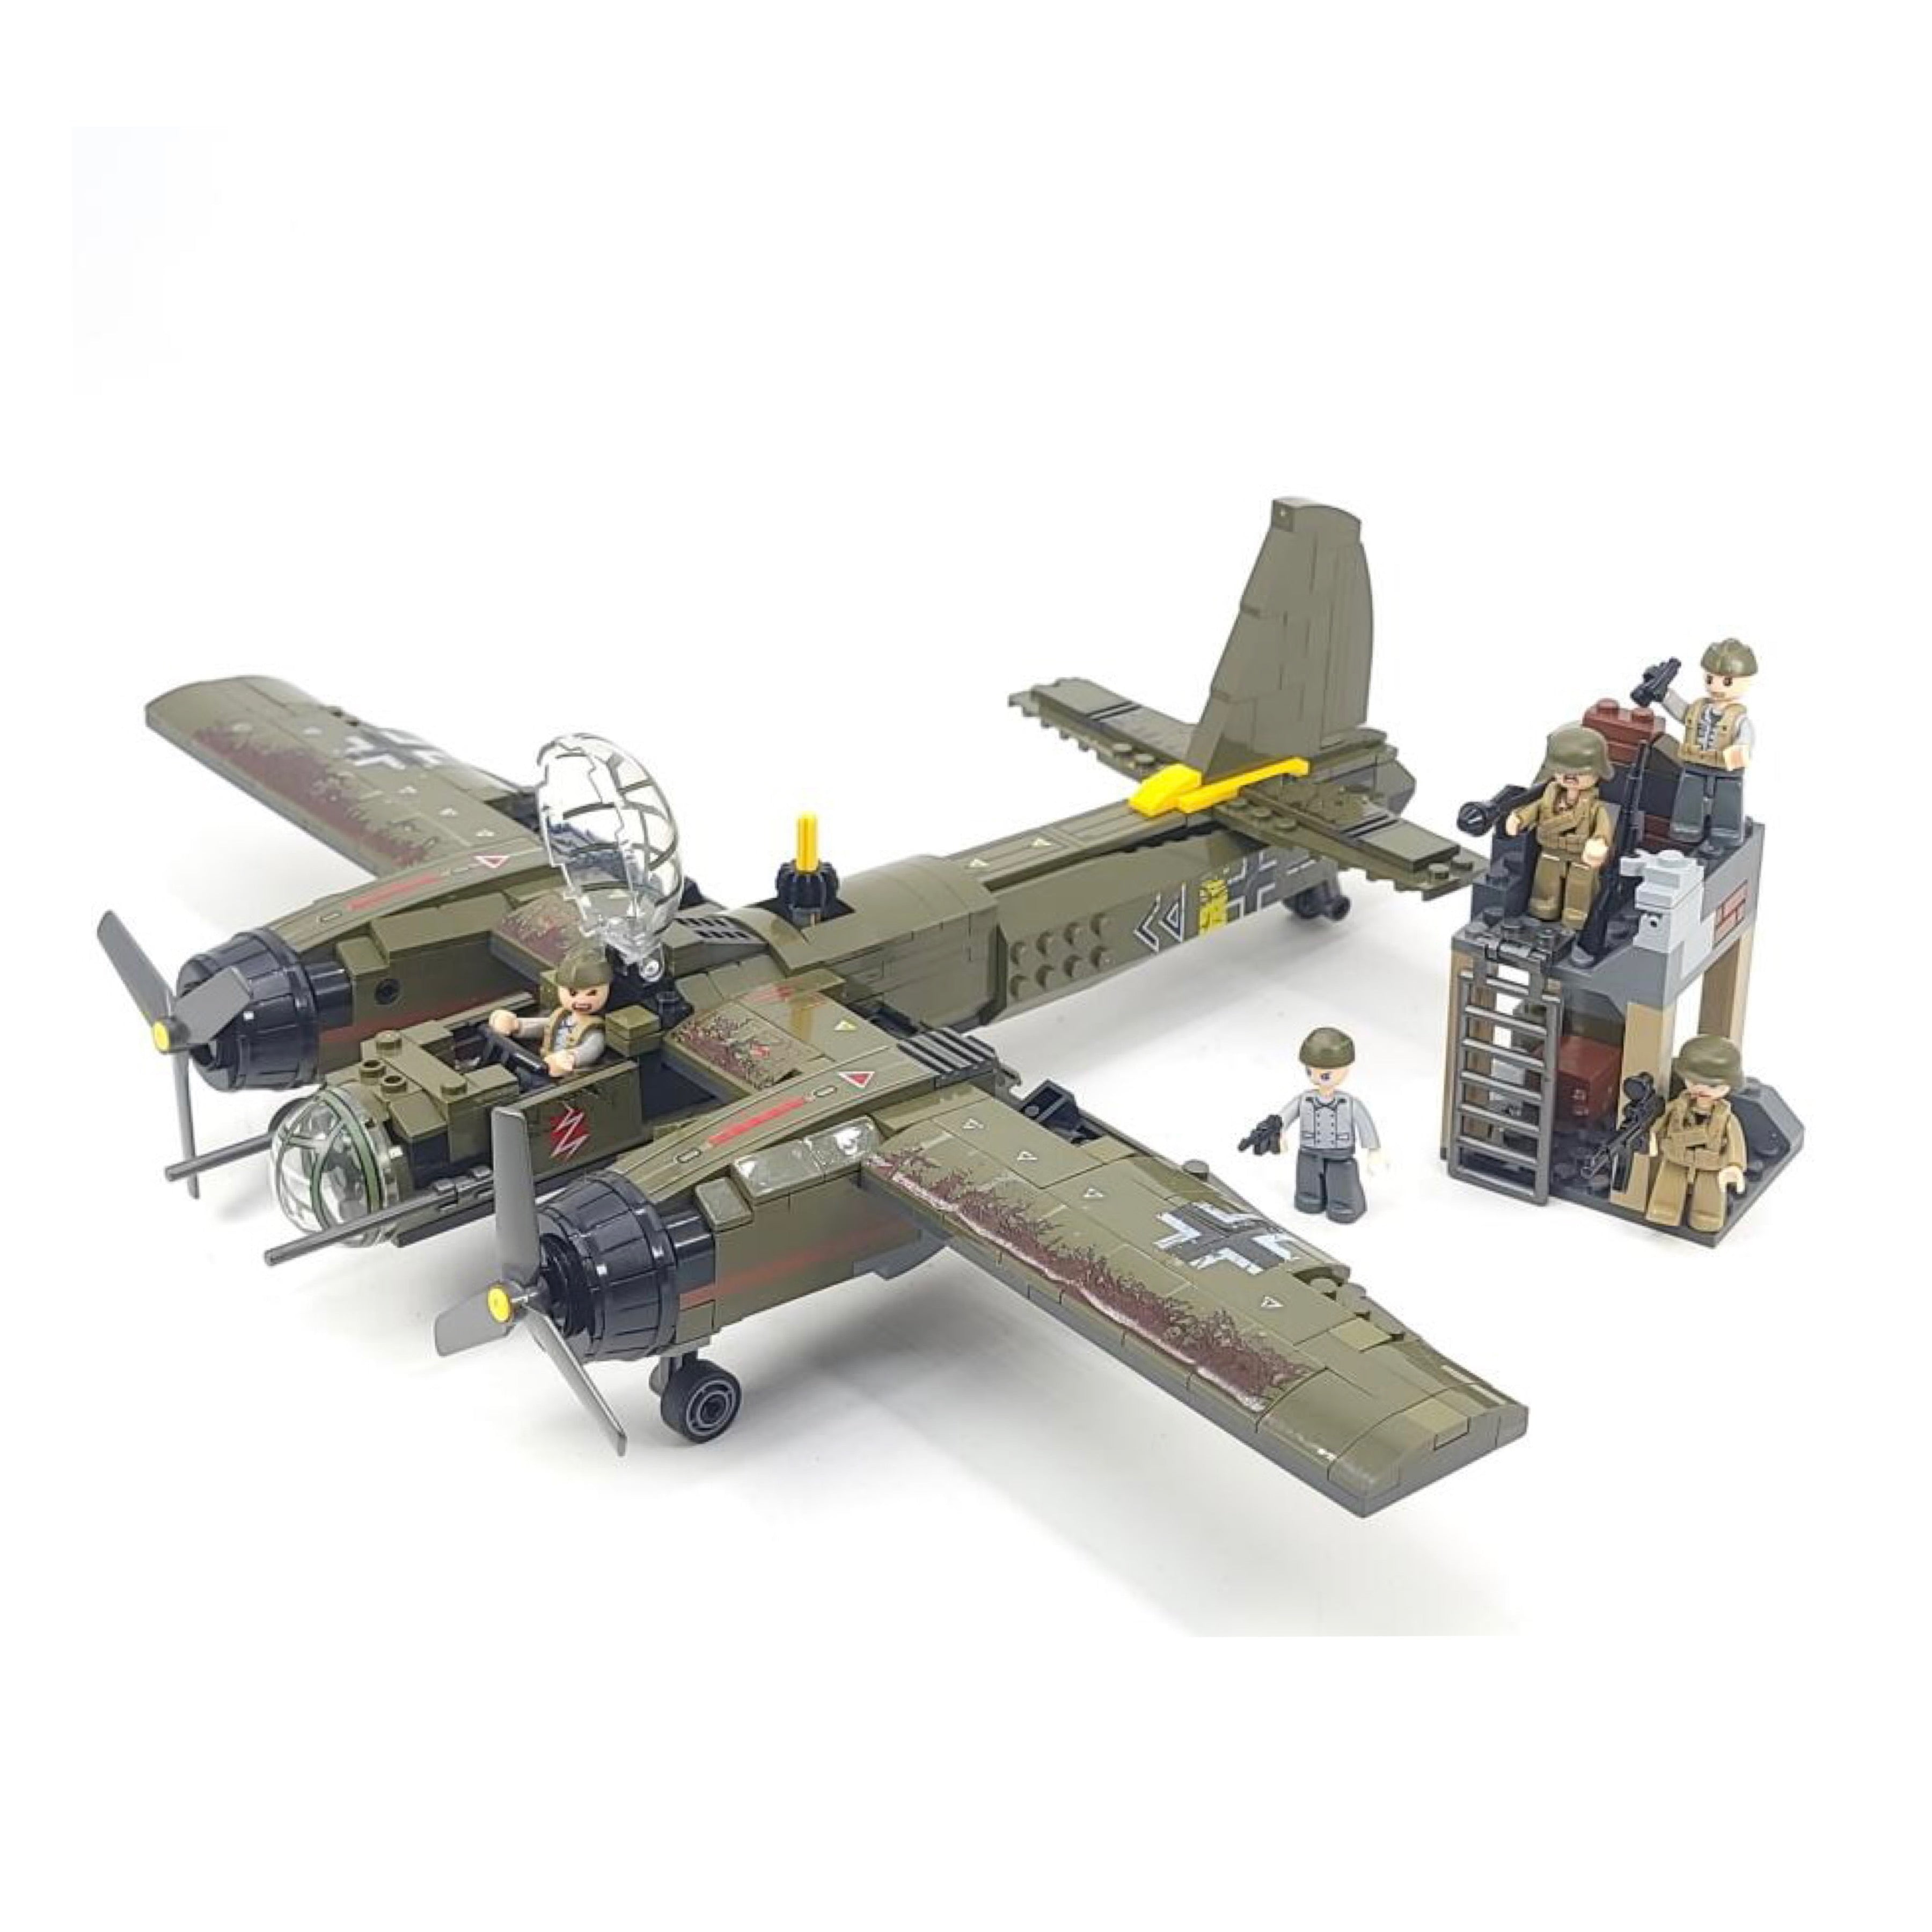 Iron Empire WW2 Air Bomber JU88 Building Blocks Toy Plane Set, JU-88 Plane, General Jim's Toys